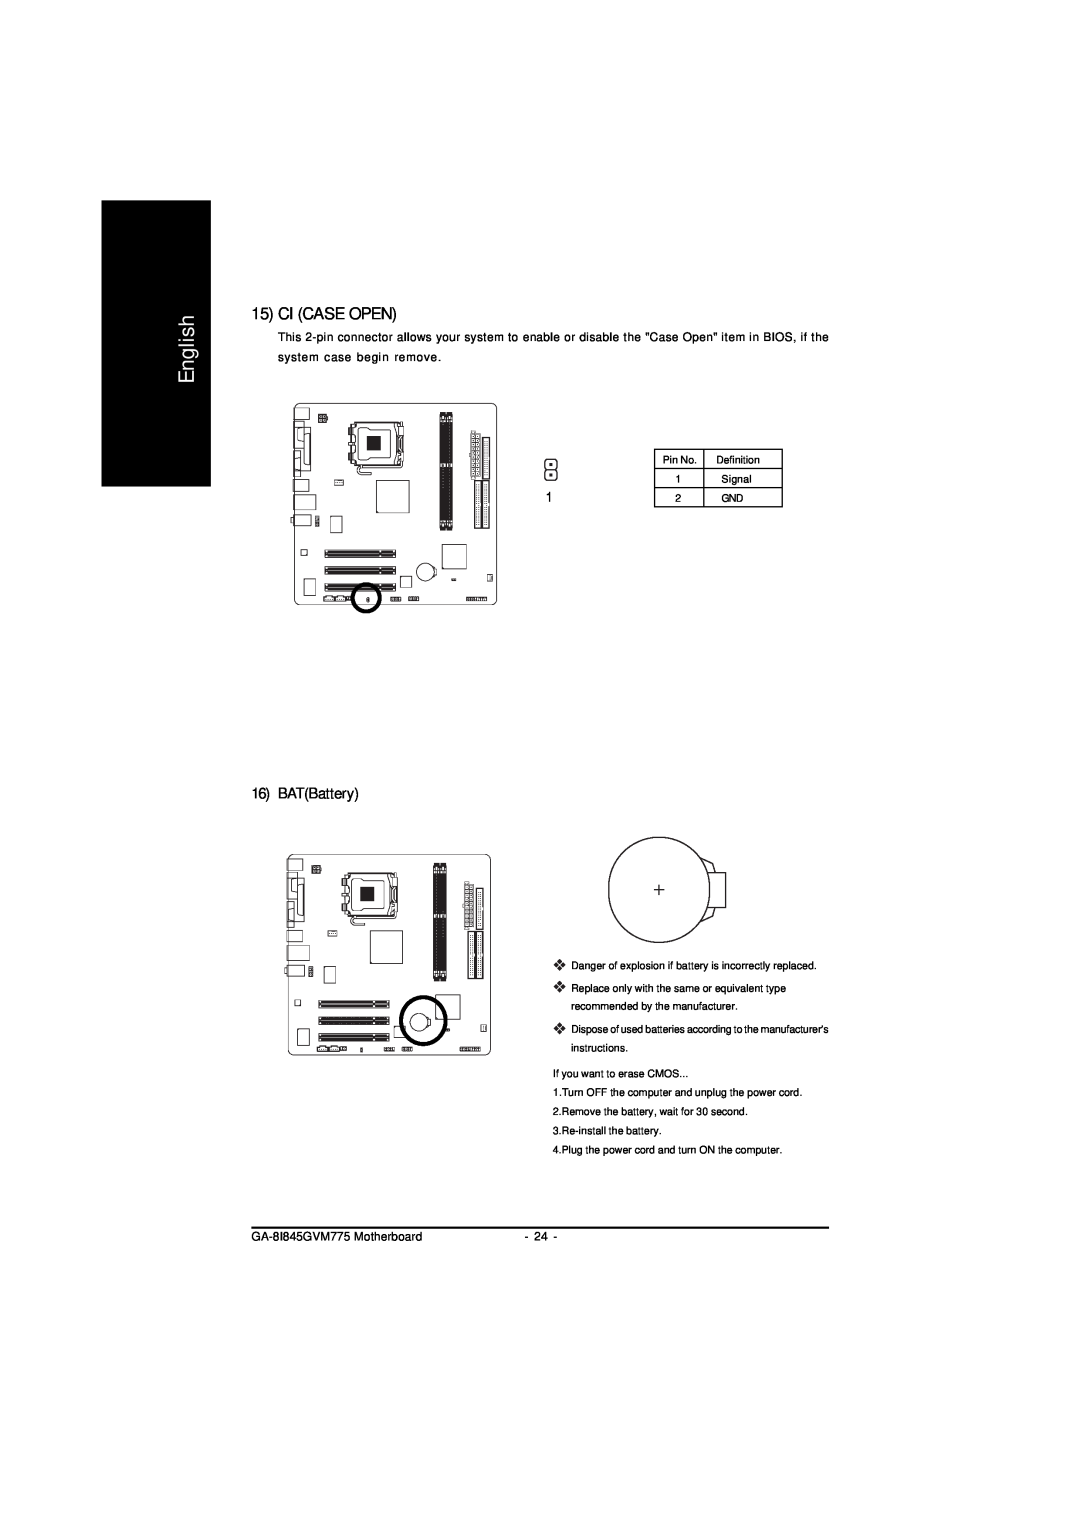 Gigabyte GA-8I845GVM775 user manual Ci Case Open, BATBattery, English 